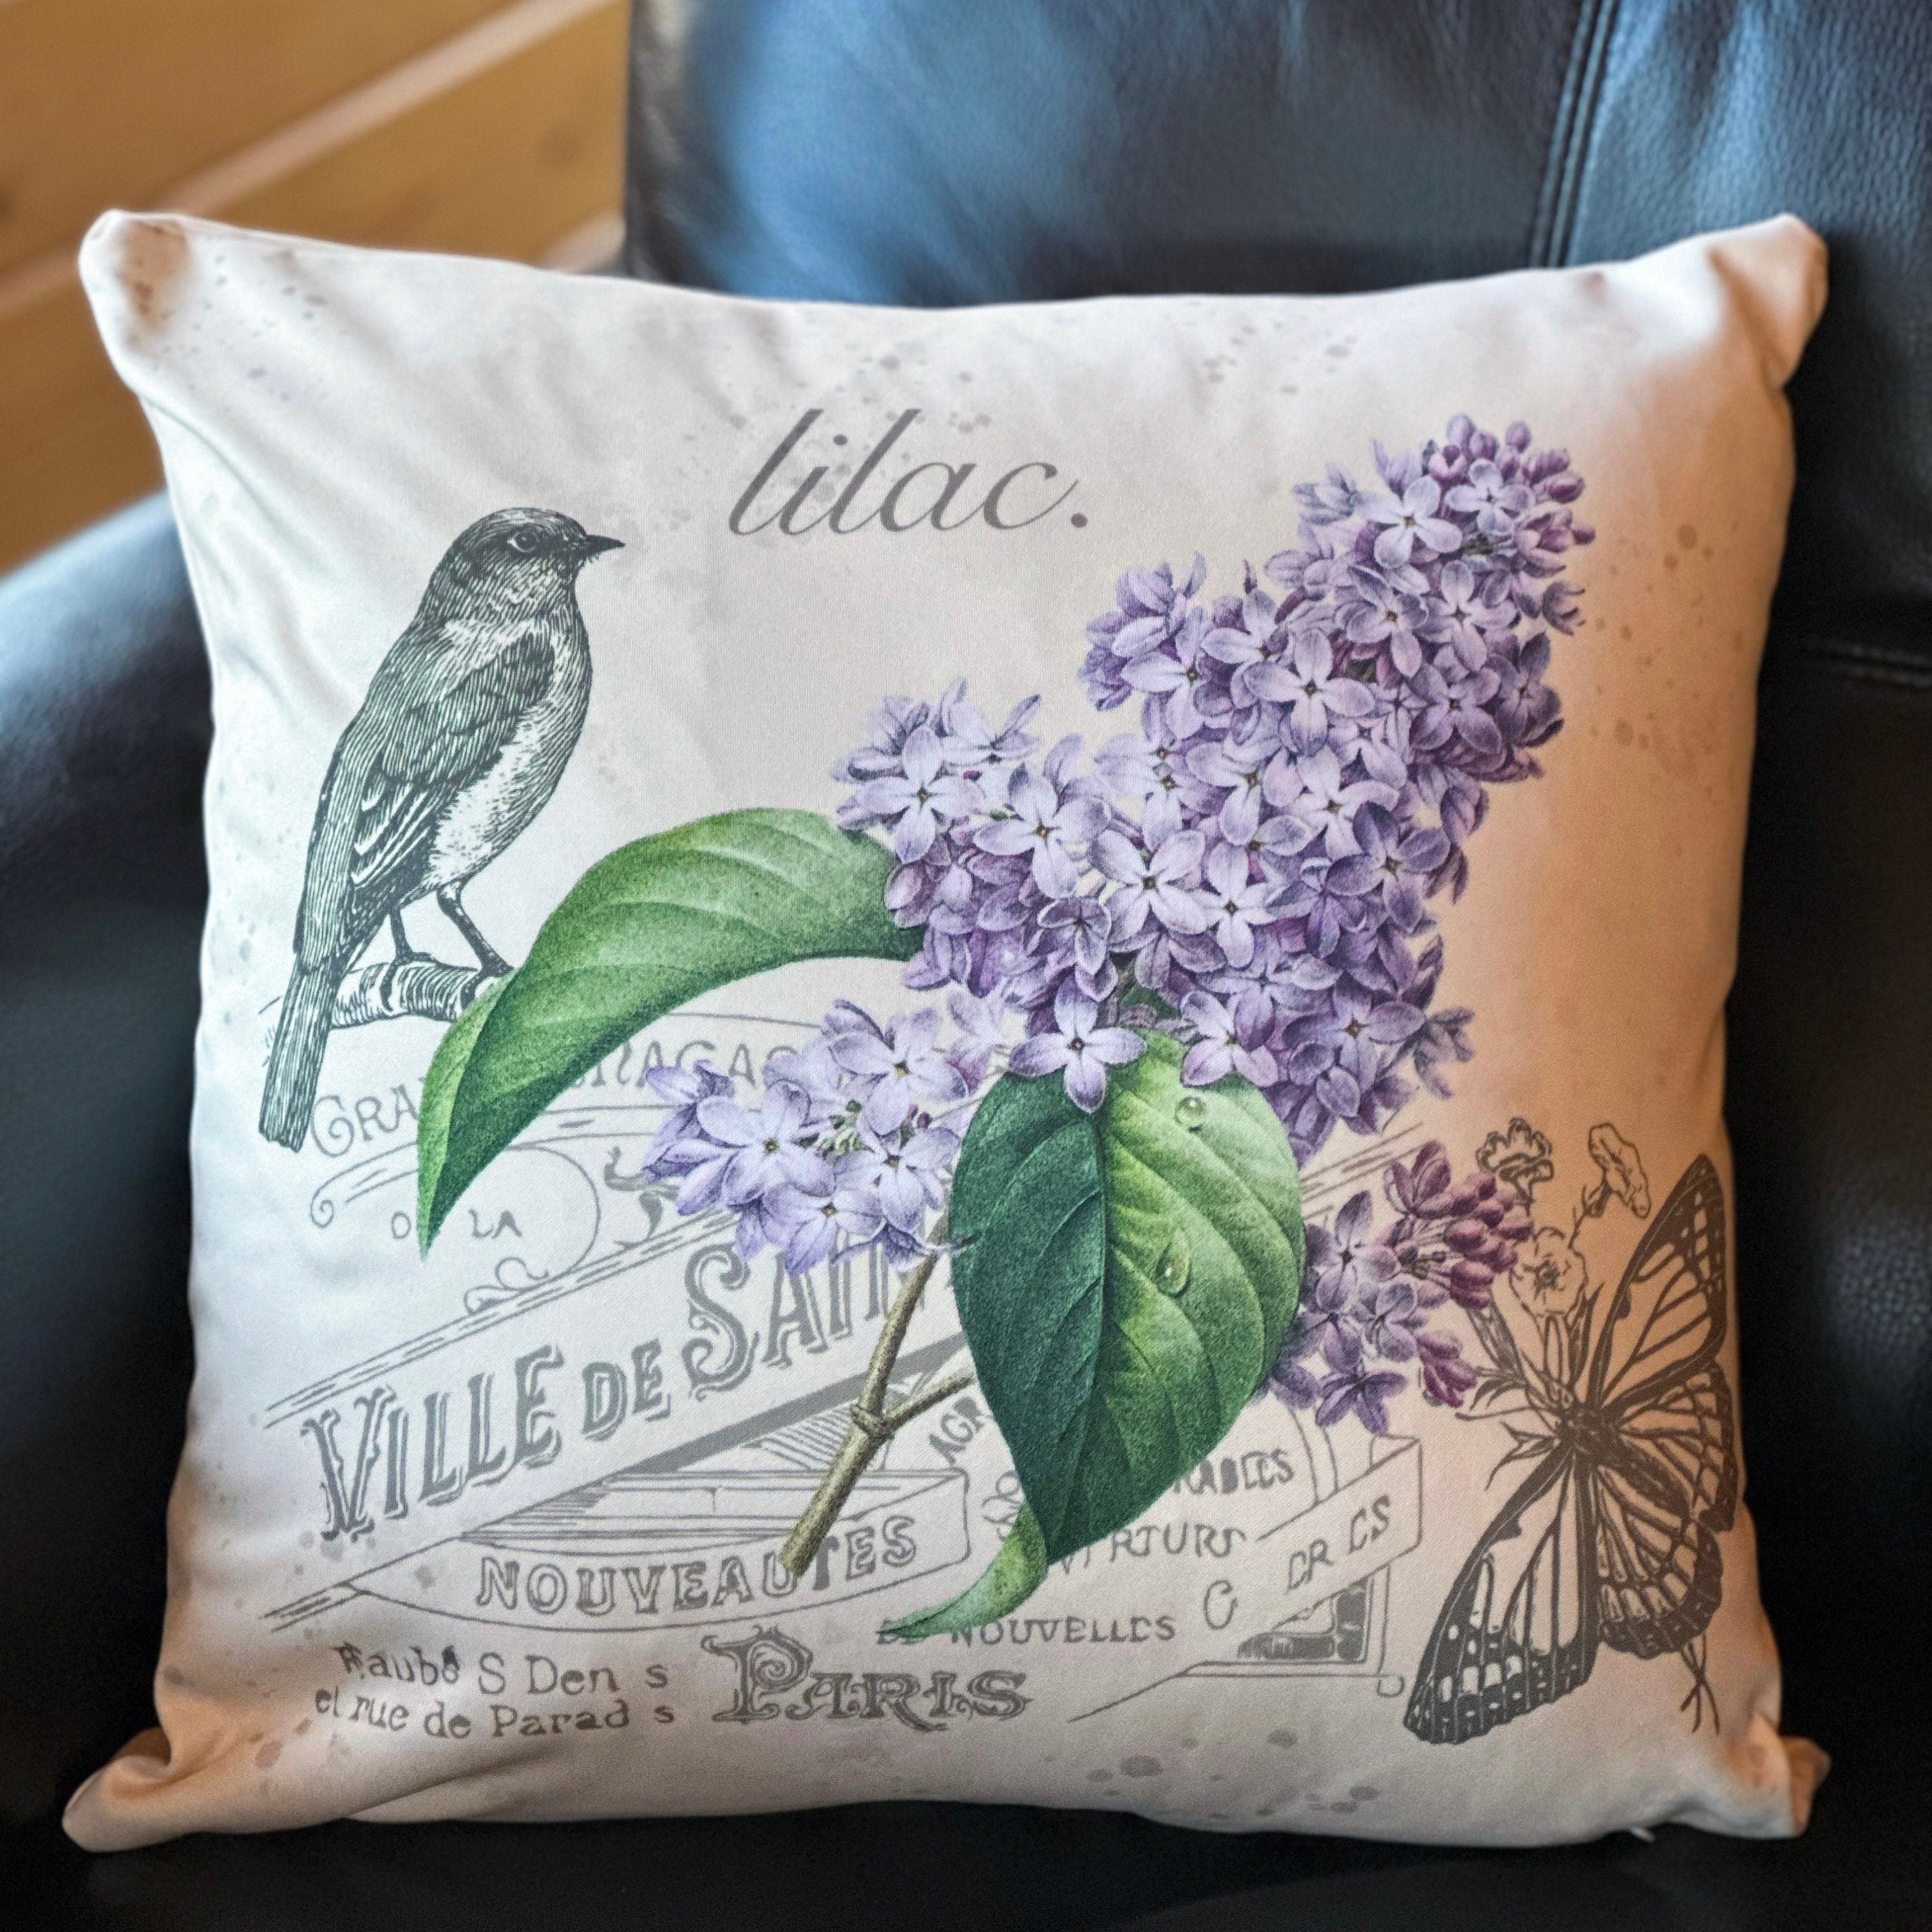 Vintage Botanical Lilac Bush Pillow with Bird and Butterfly - Garden Lover Friend Gift Idea - Gardening Theme Flower Farmer Decoration Throw